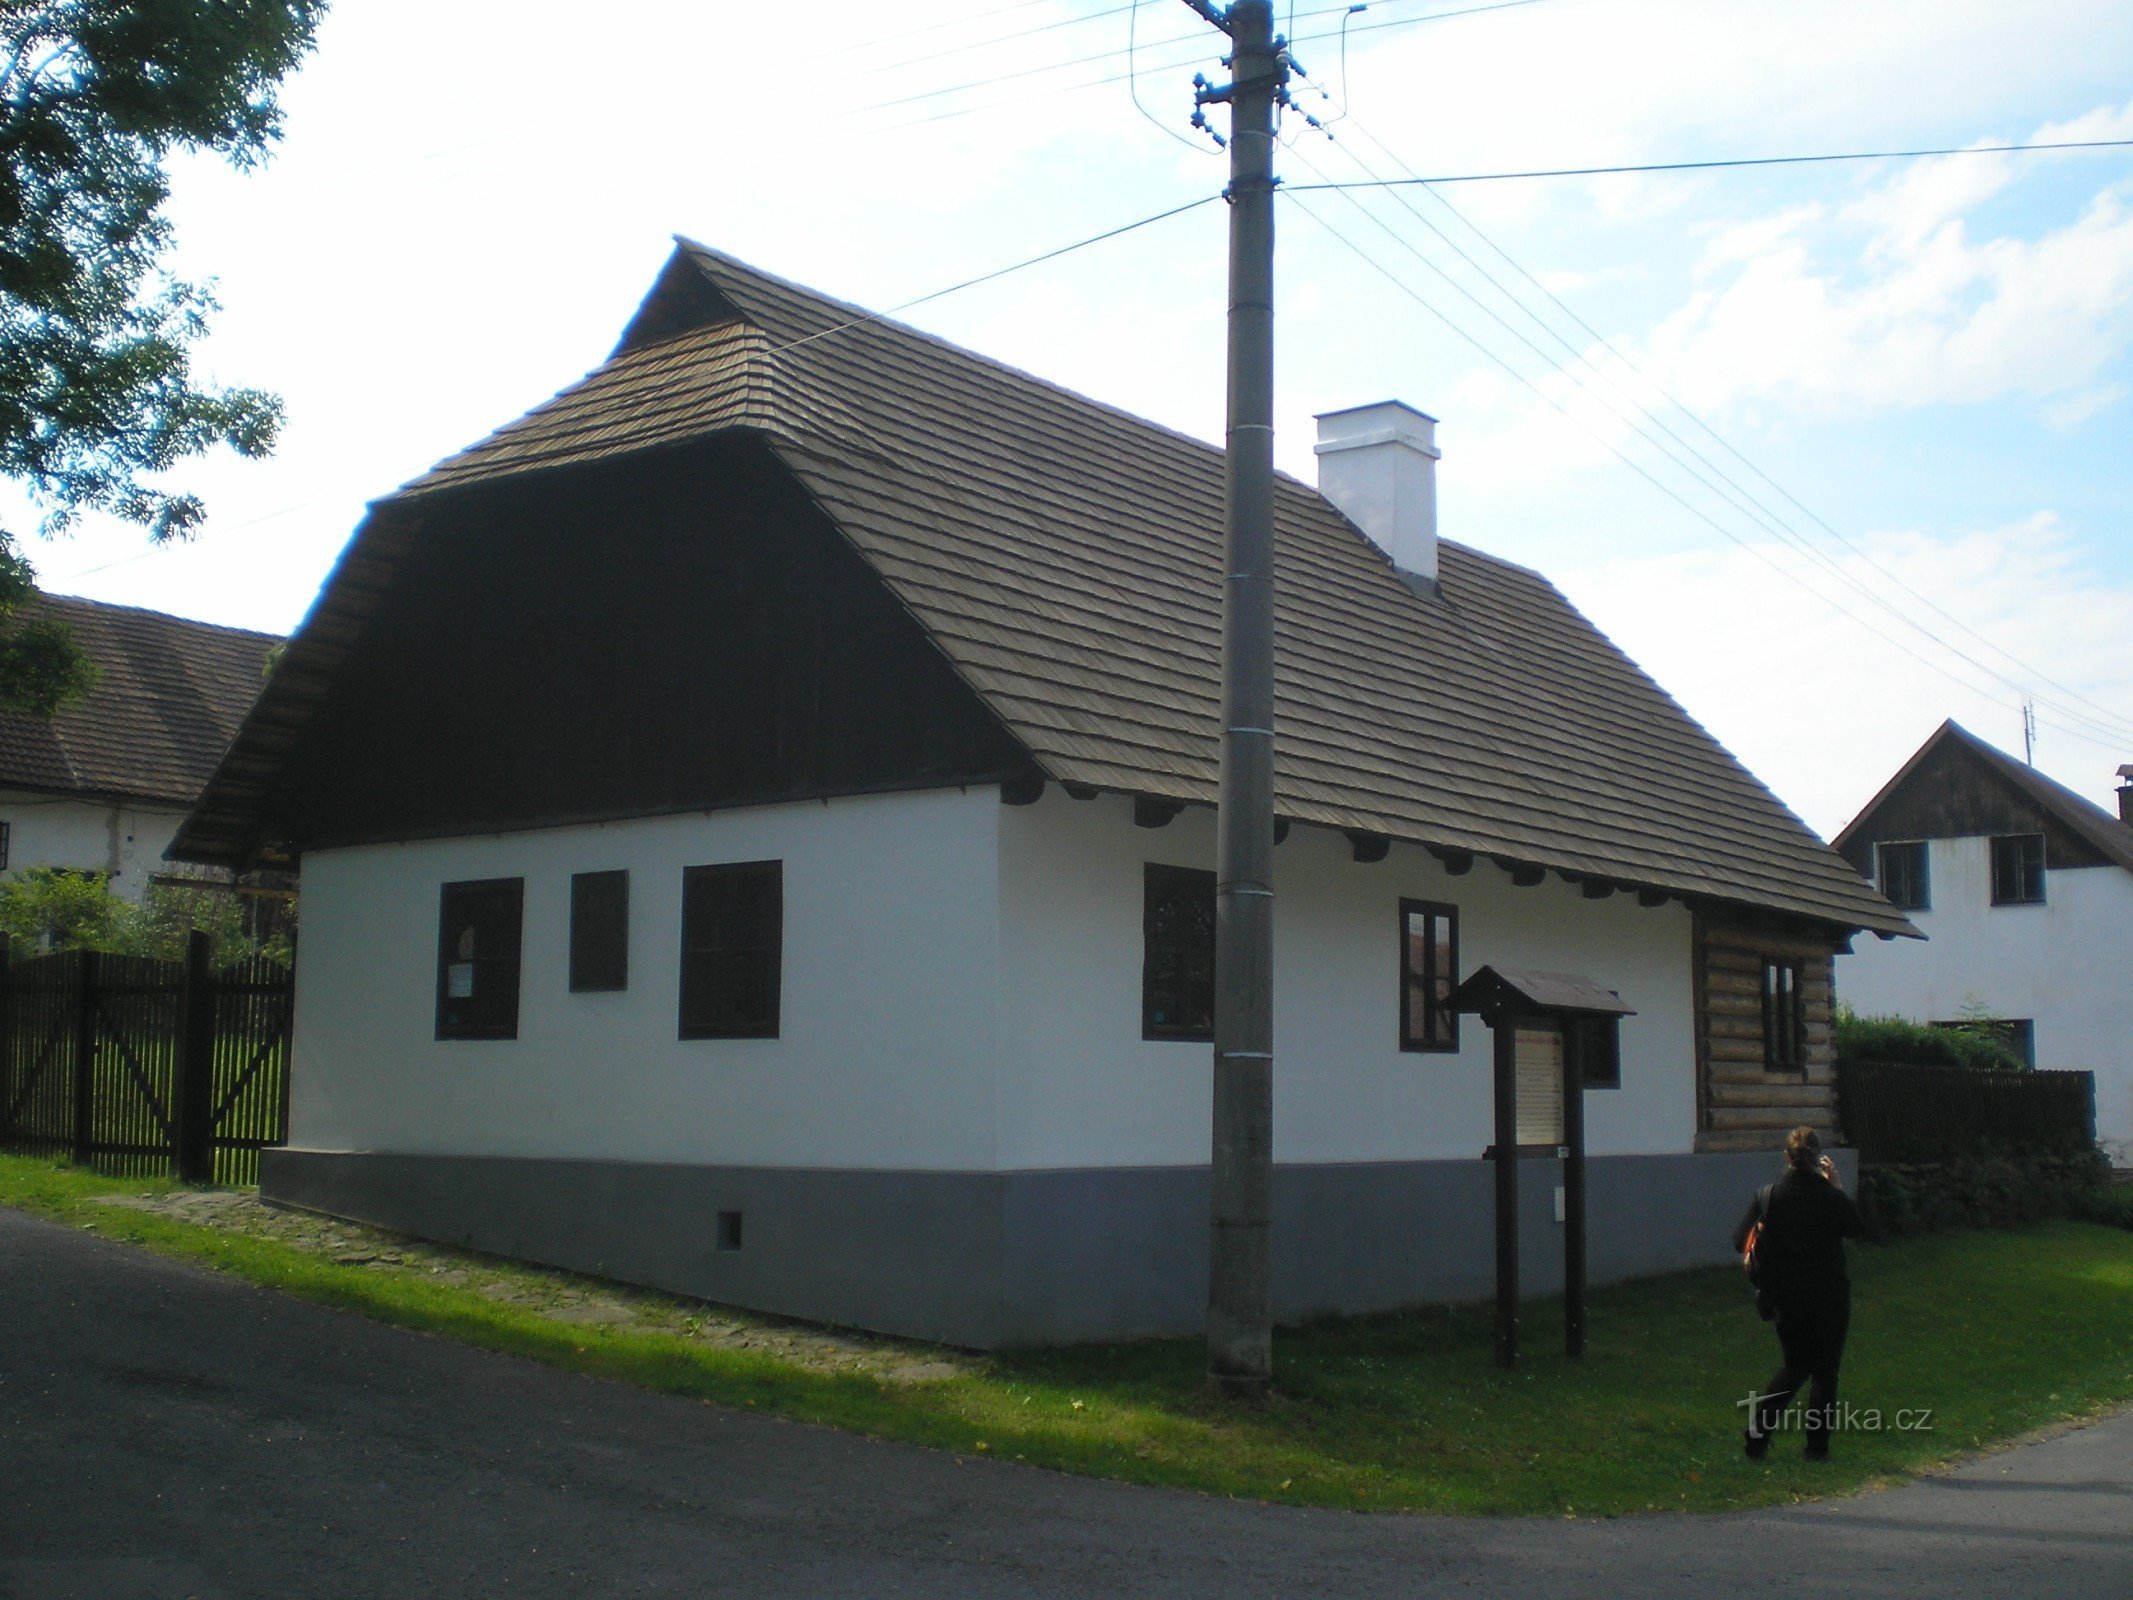 František Křižík szülőhelye